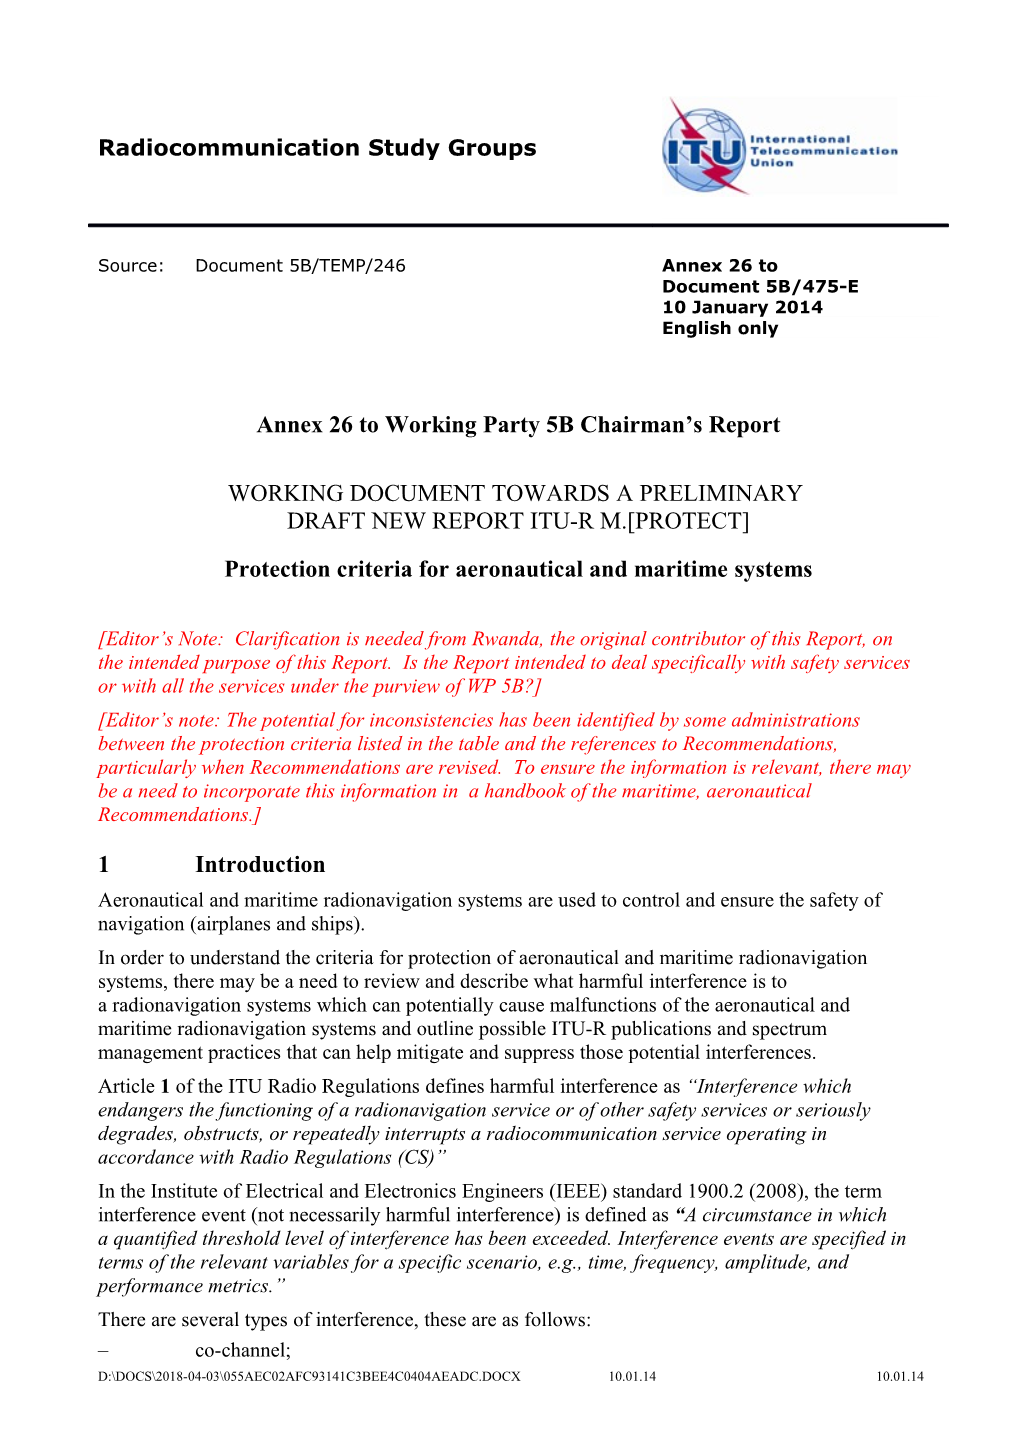 ITU-R WP5B: Working Document Towards a Preliminary Draft New Report ITU-R M. PROTECT